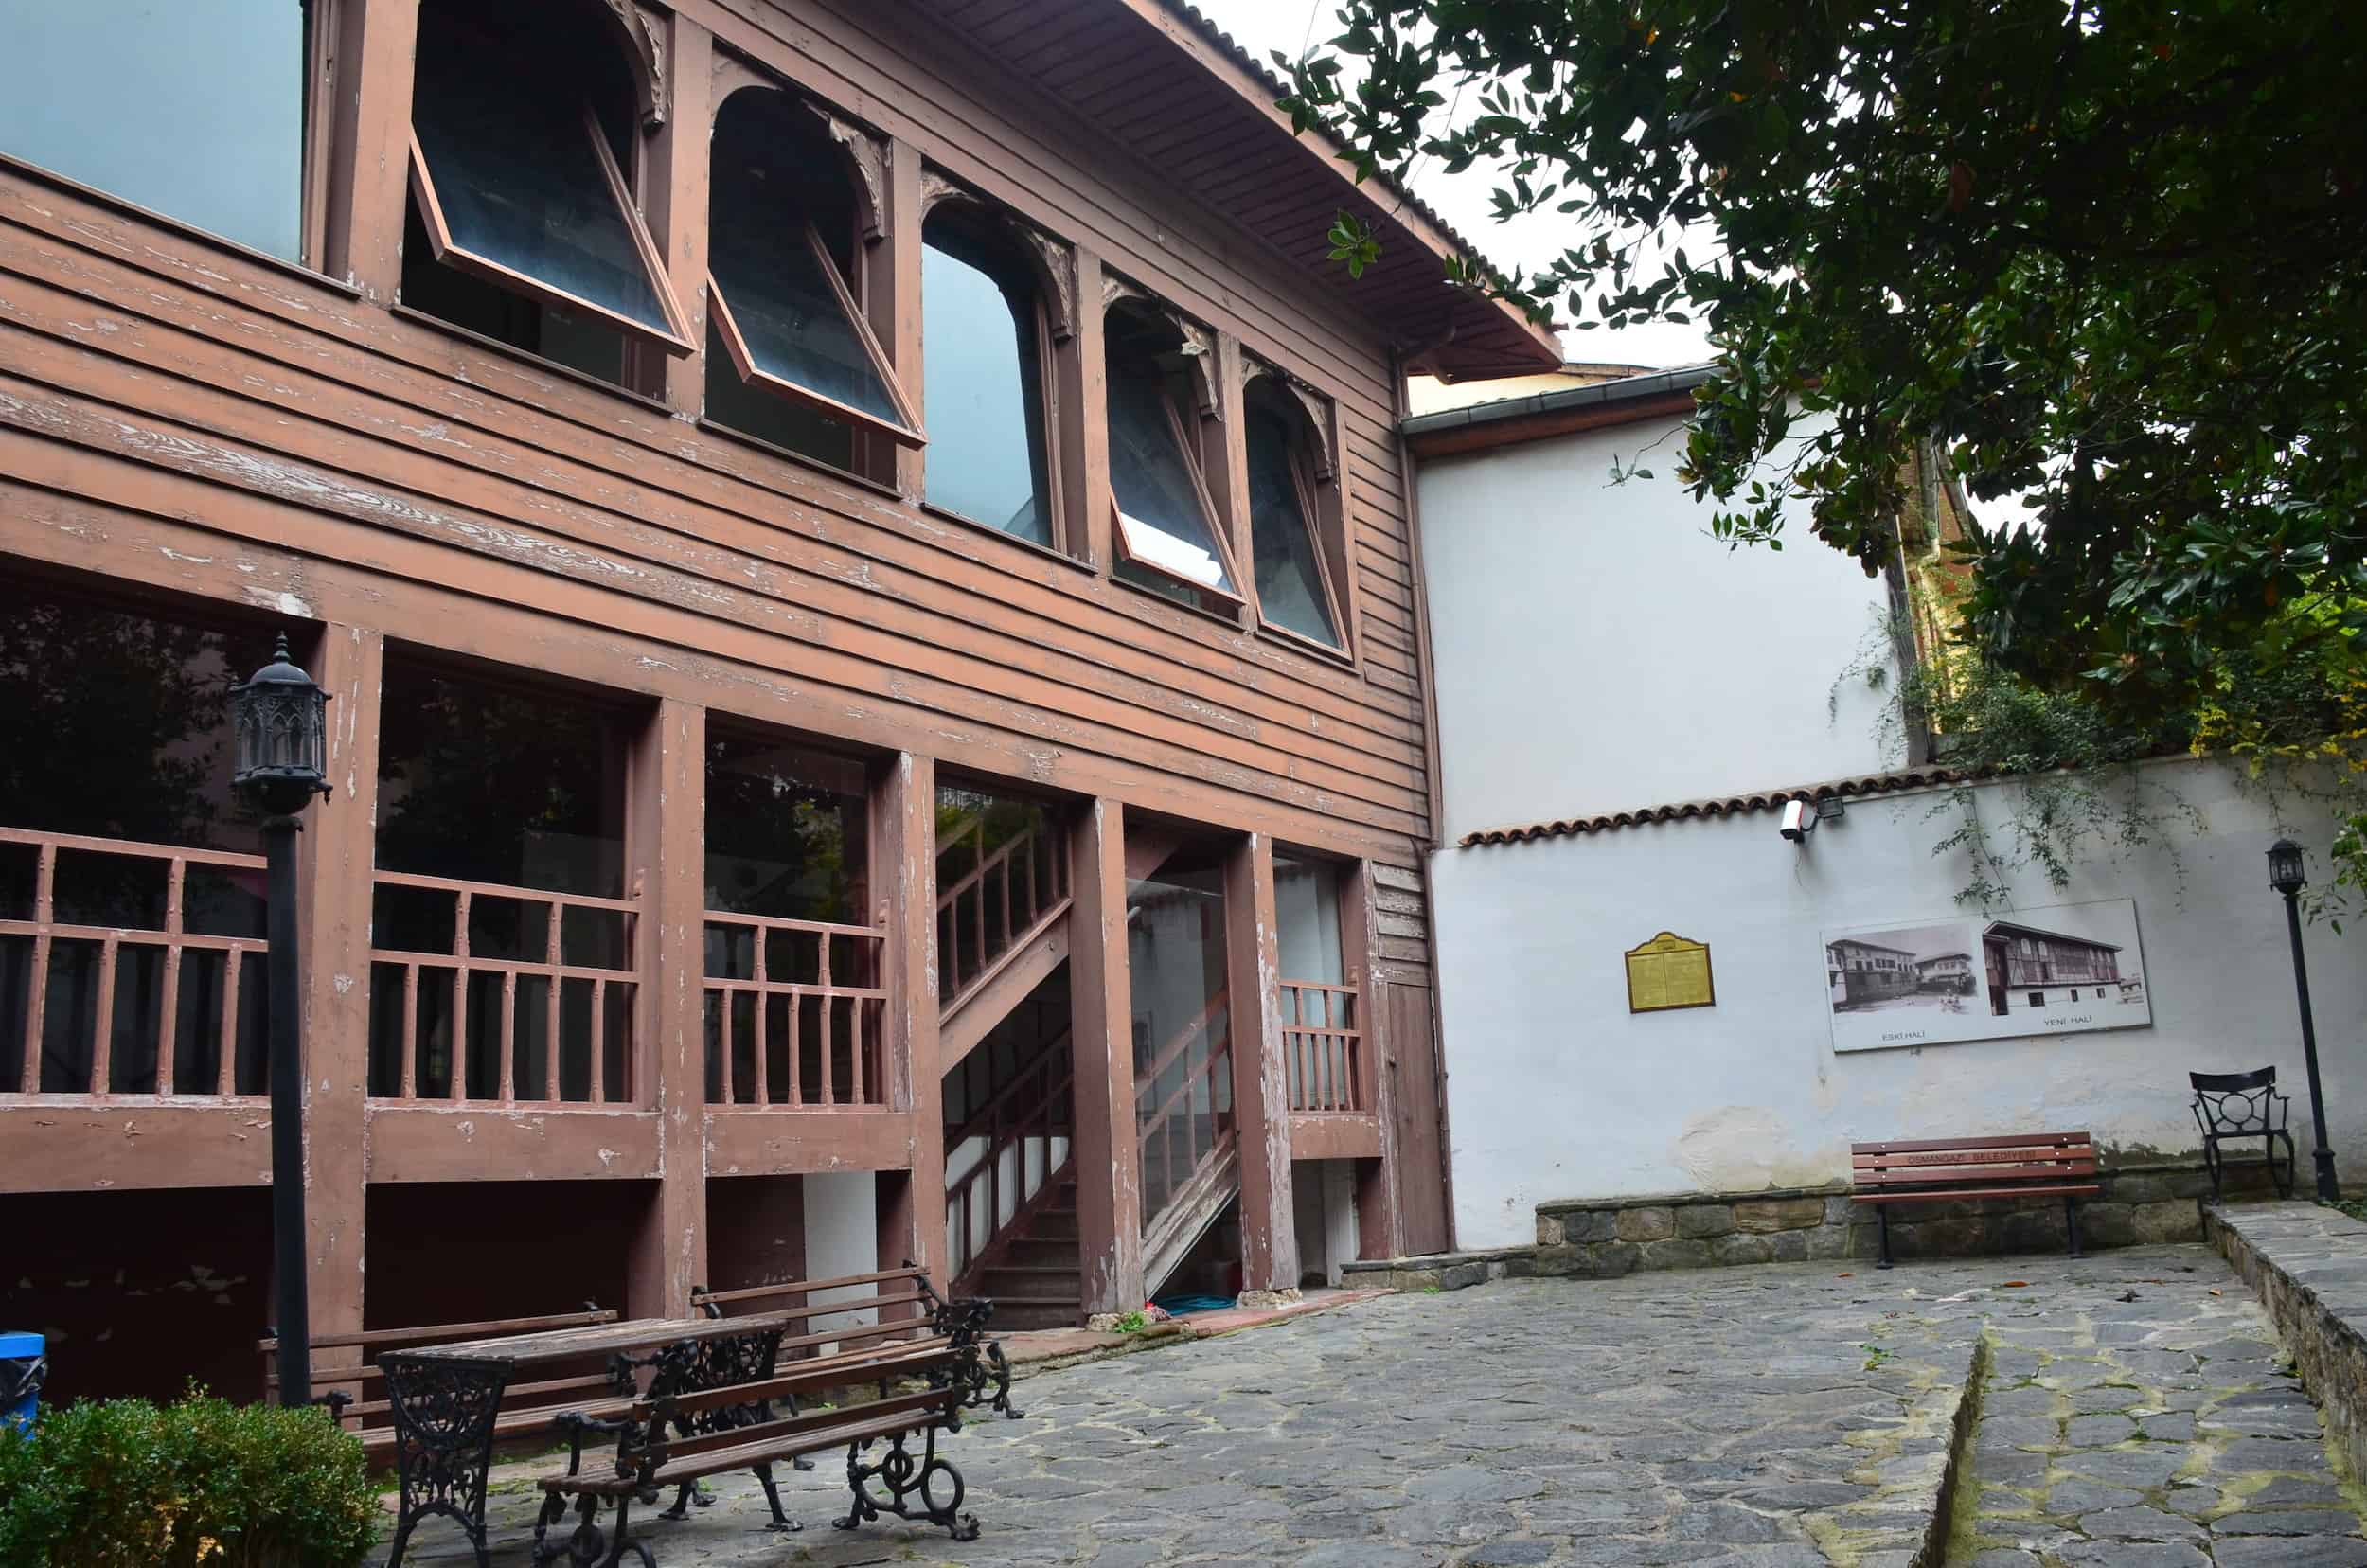 Courtyard at the Ottoman House Museum in Bursa, Turkey